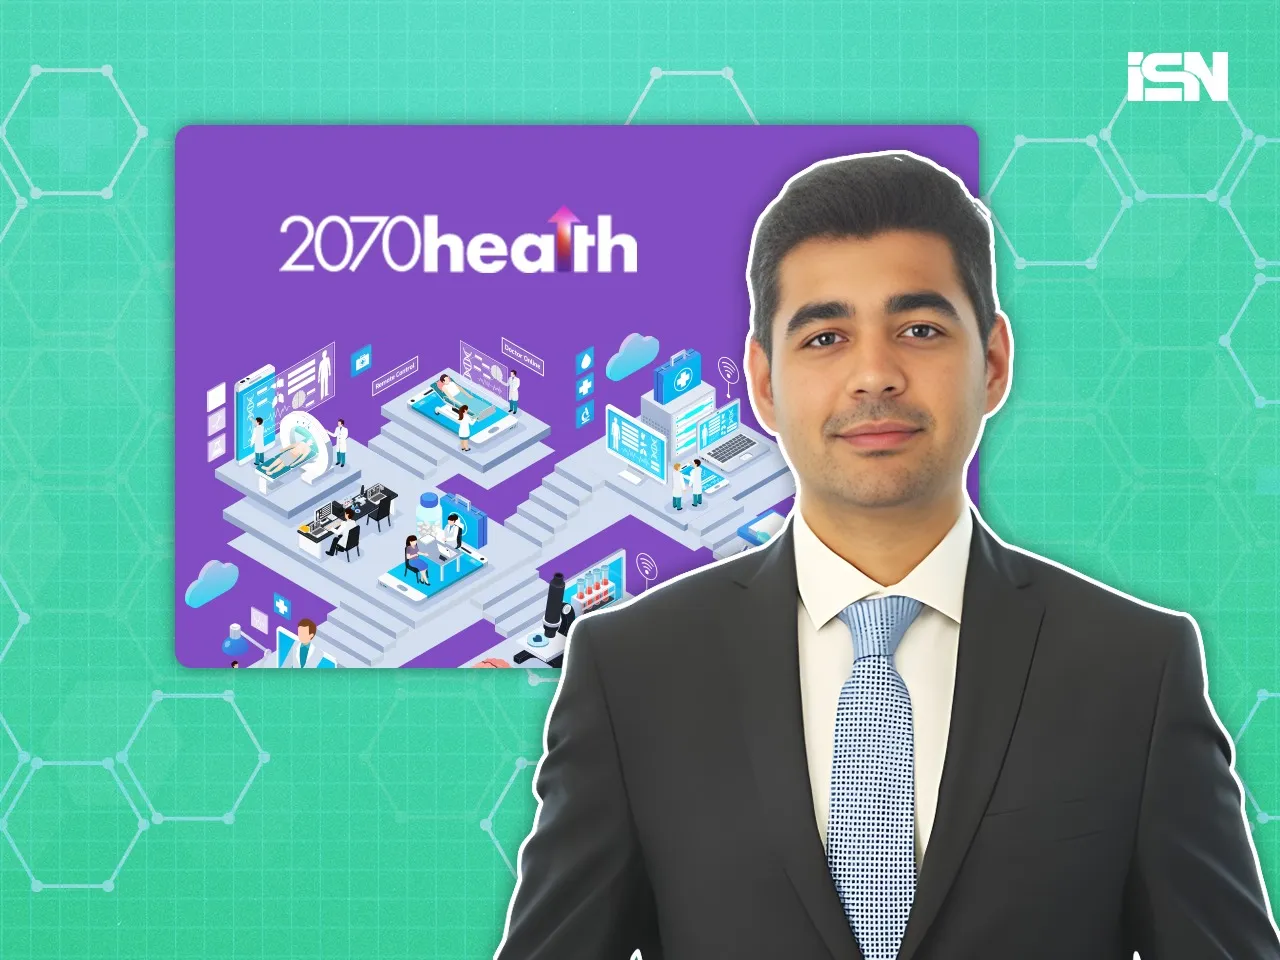 2070 health co-founder